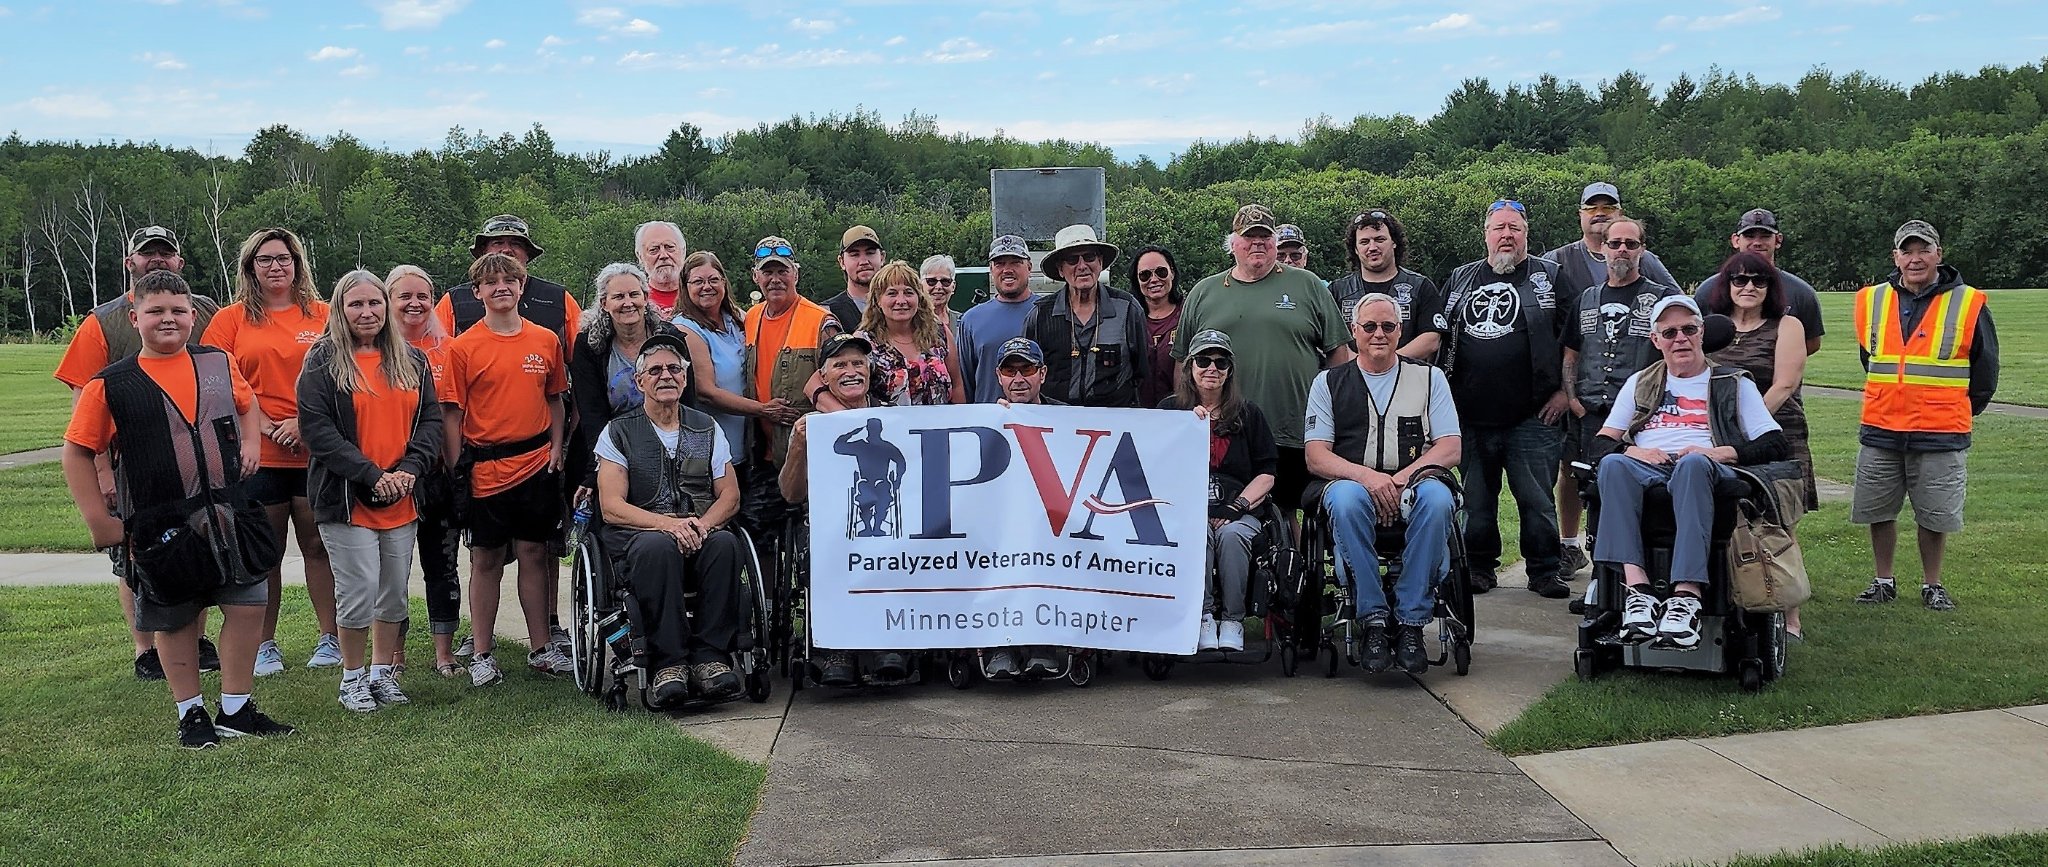 Paralyzed veterans of america